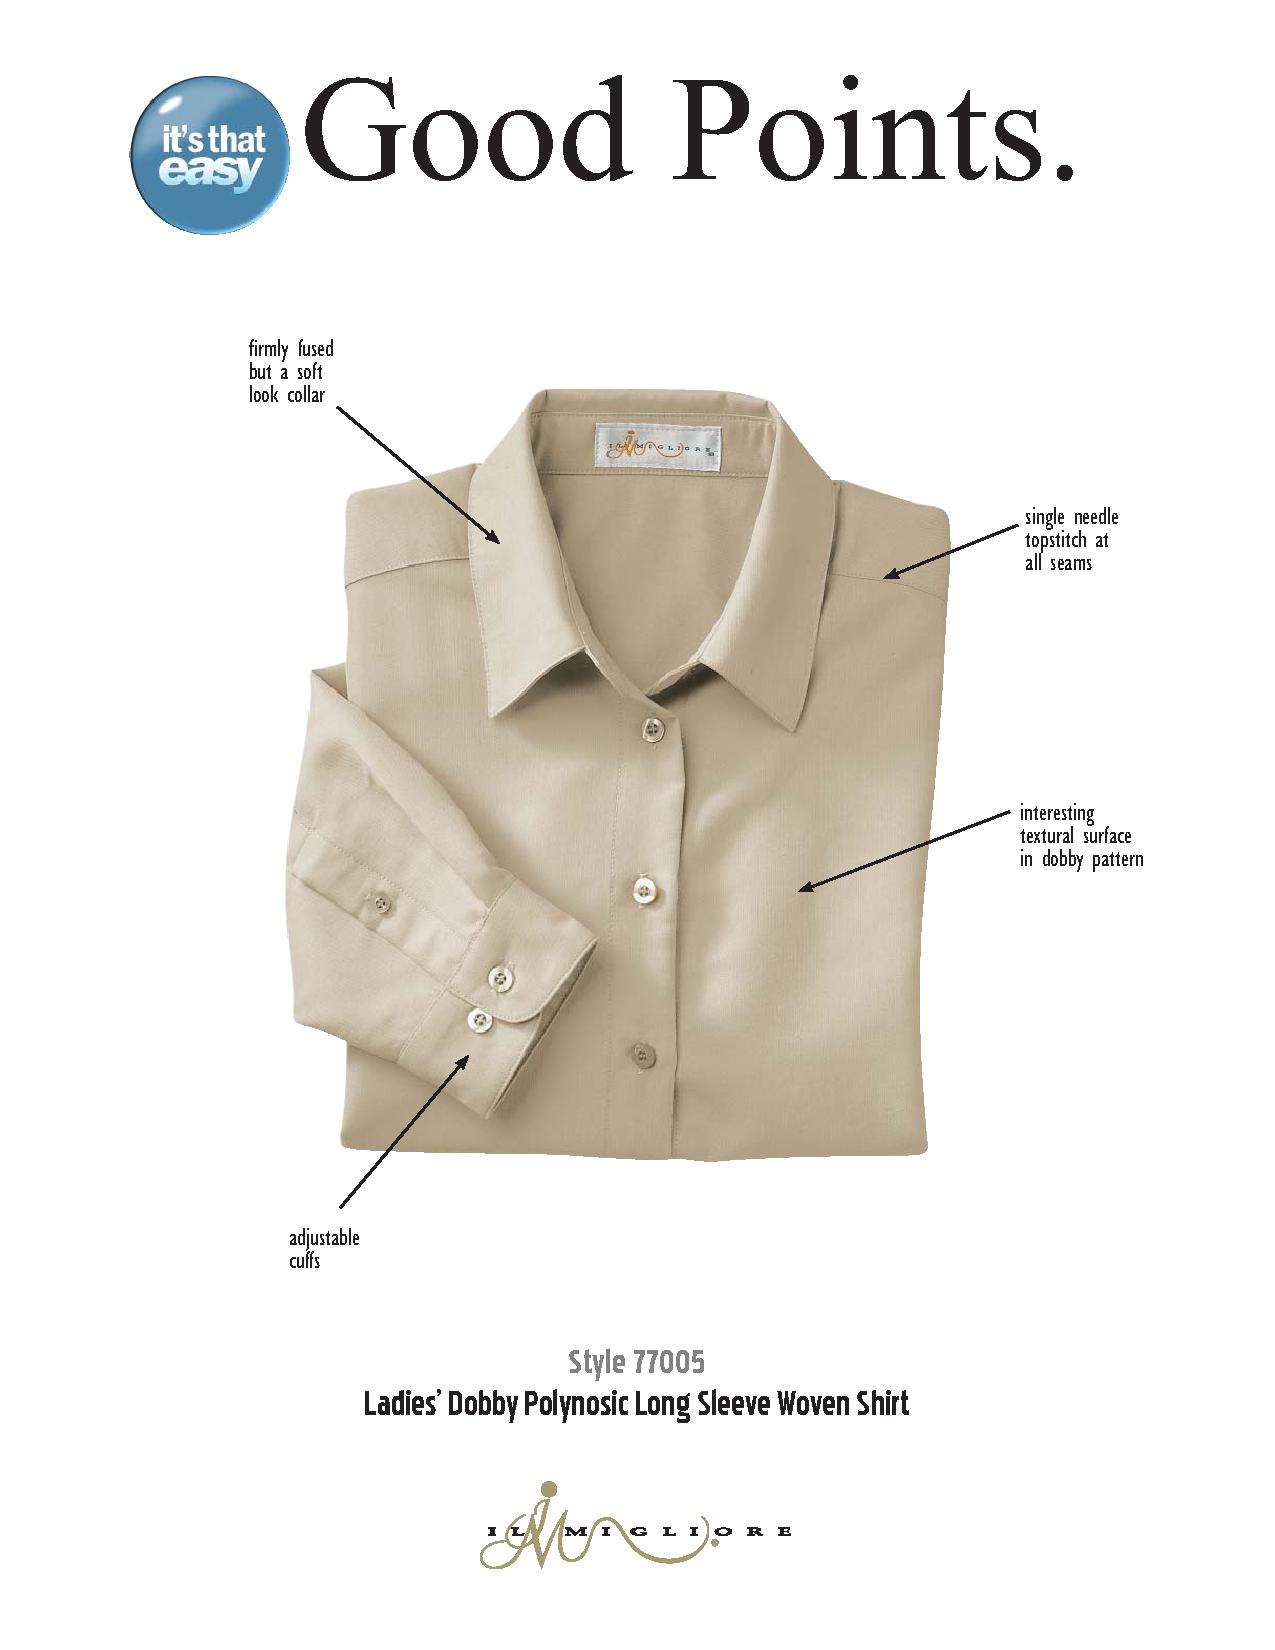 Ash City Polynosic 77005 - Ladies' Dobby Polyester Long Sleeve Shirt